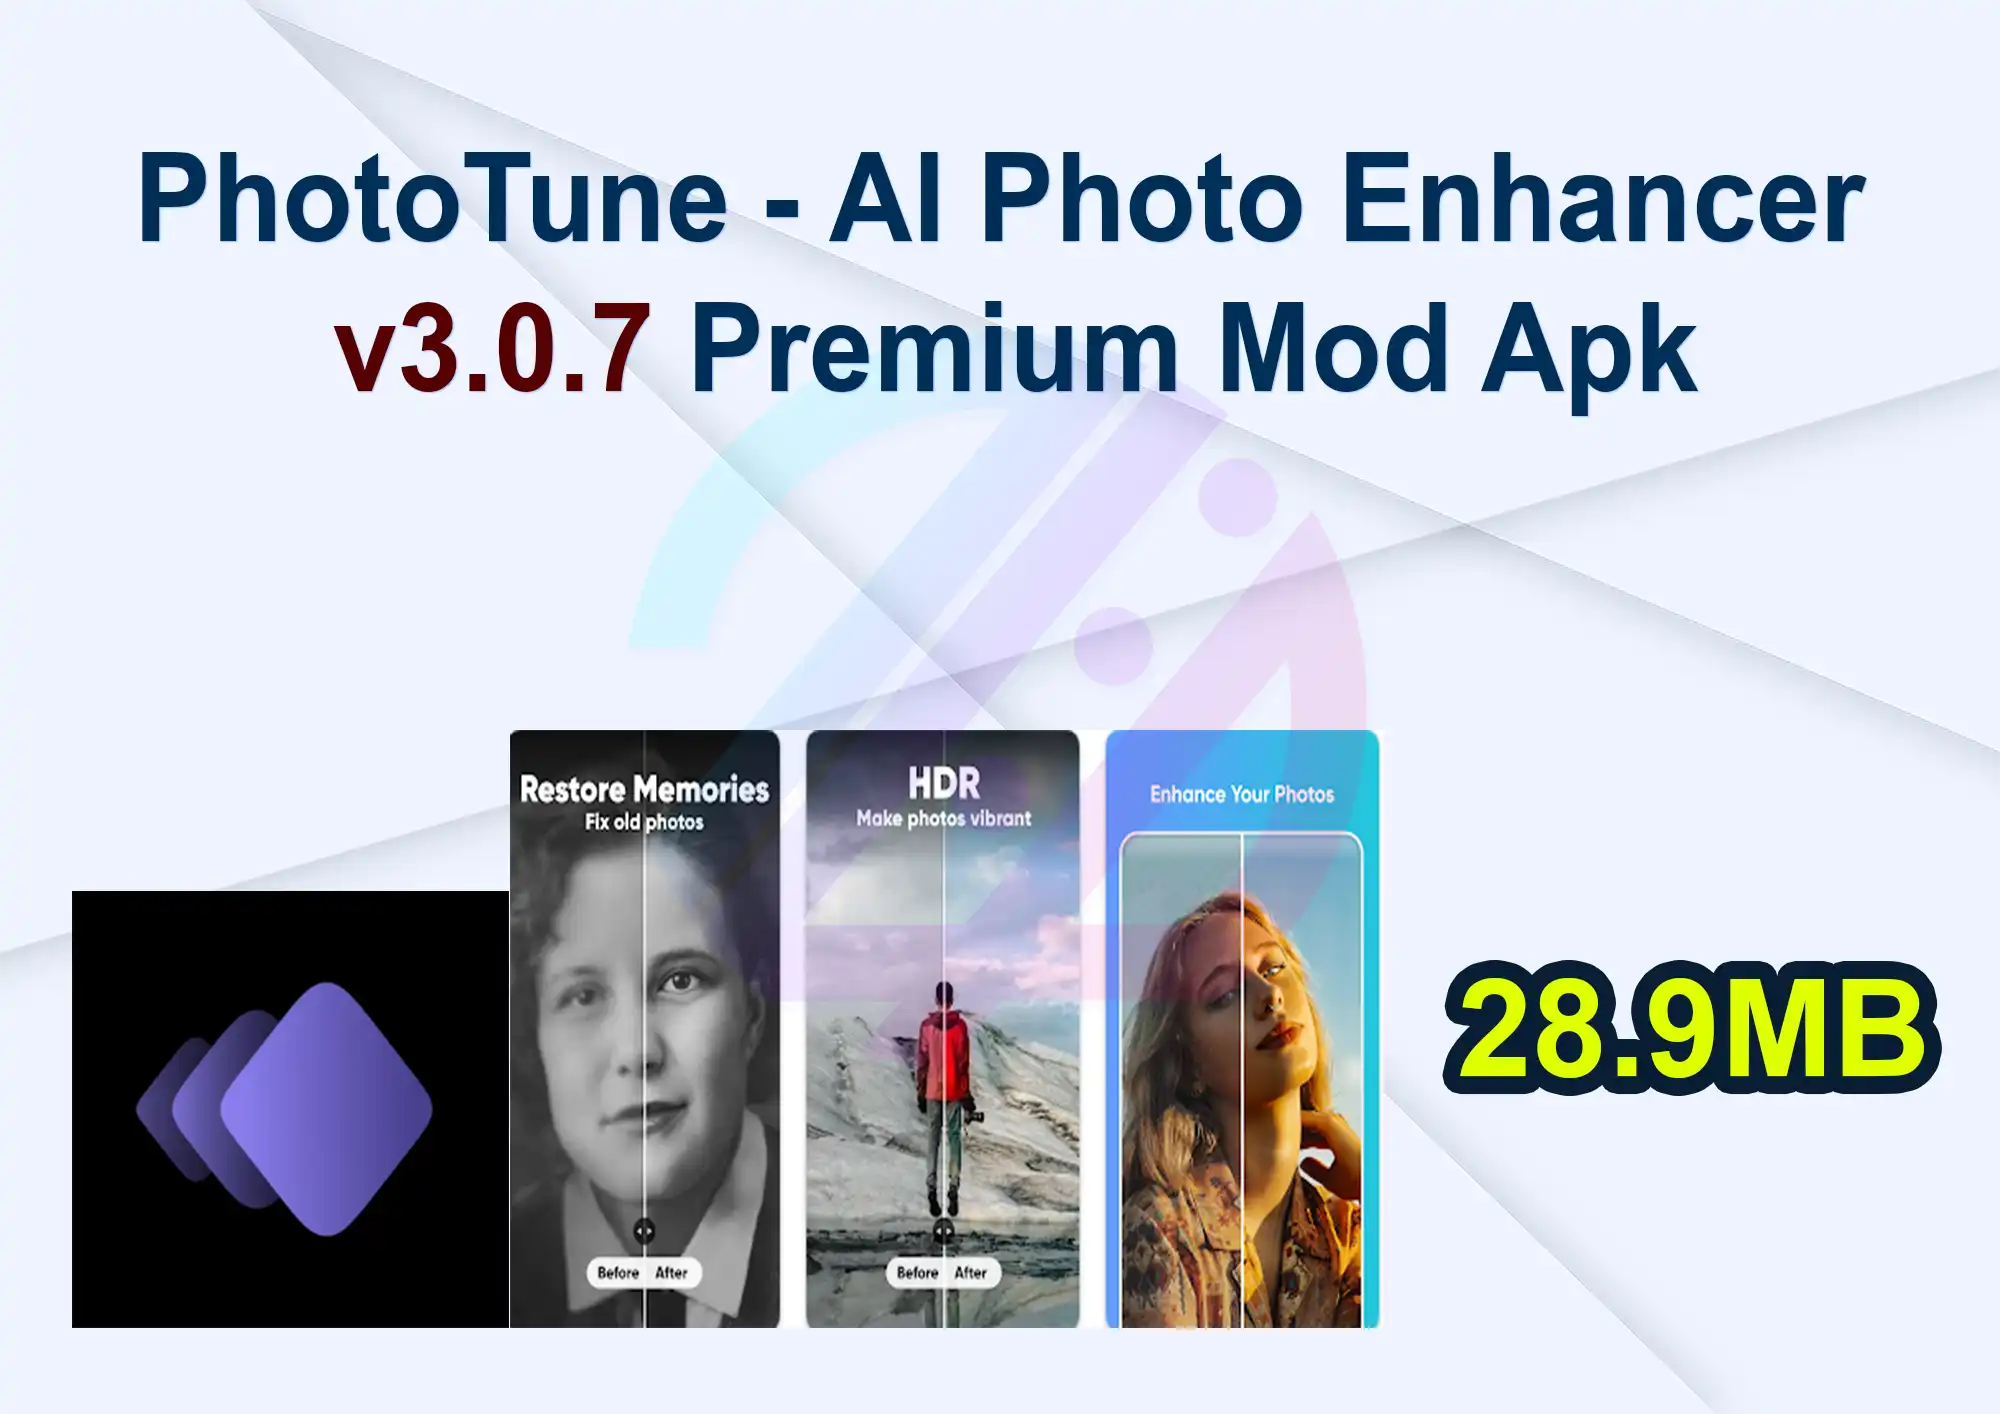 PhotoTune - AI Photo Enhancer v3.0.7 Premium Mod Apk